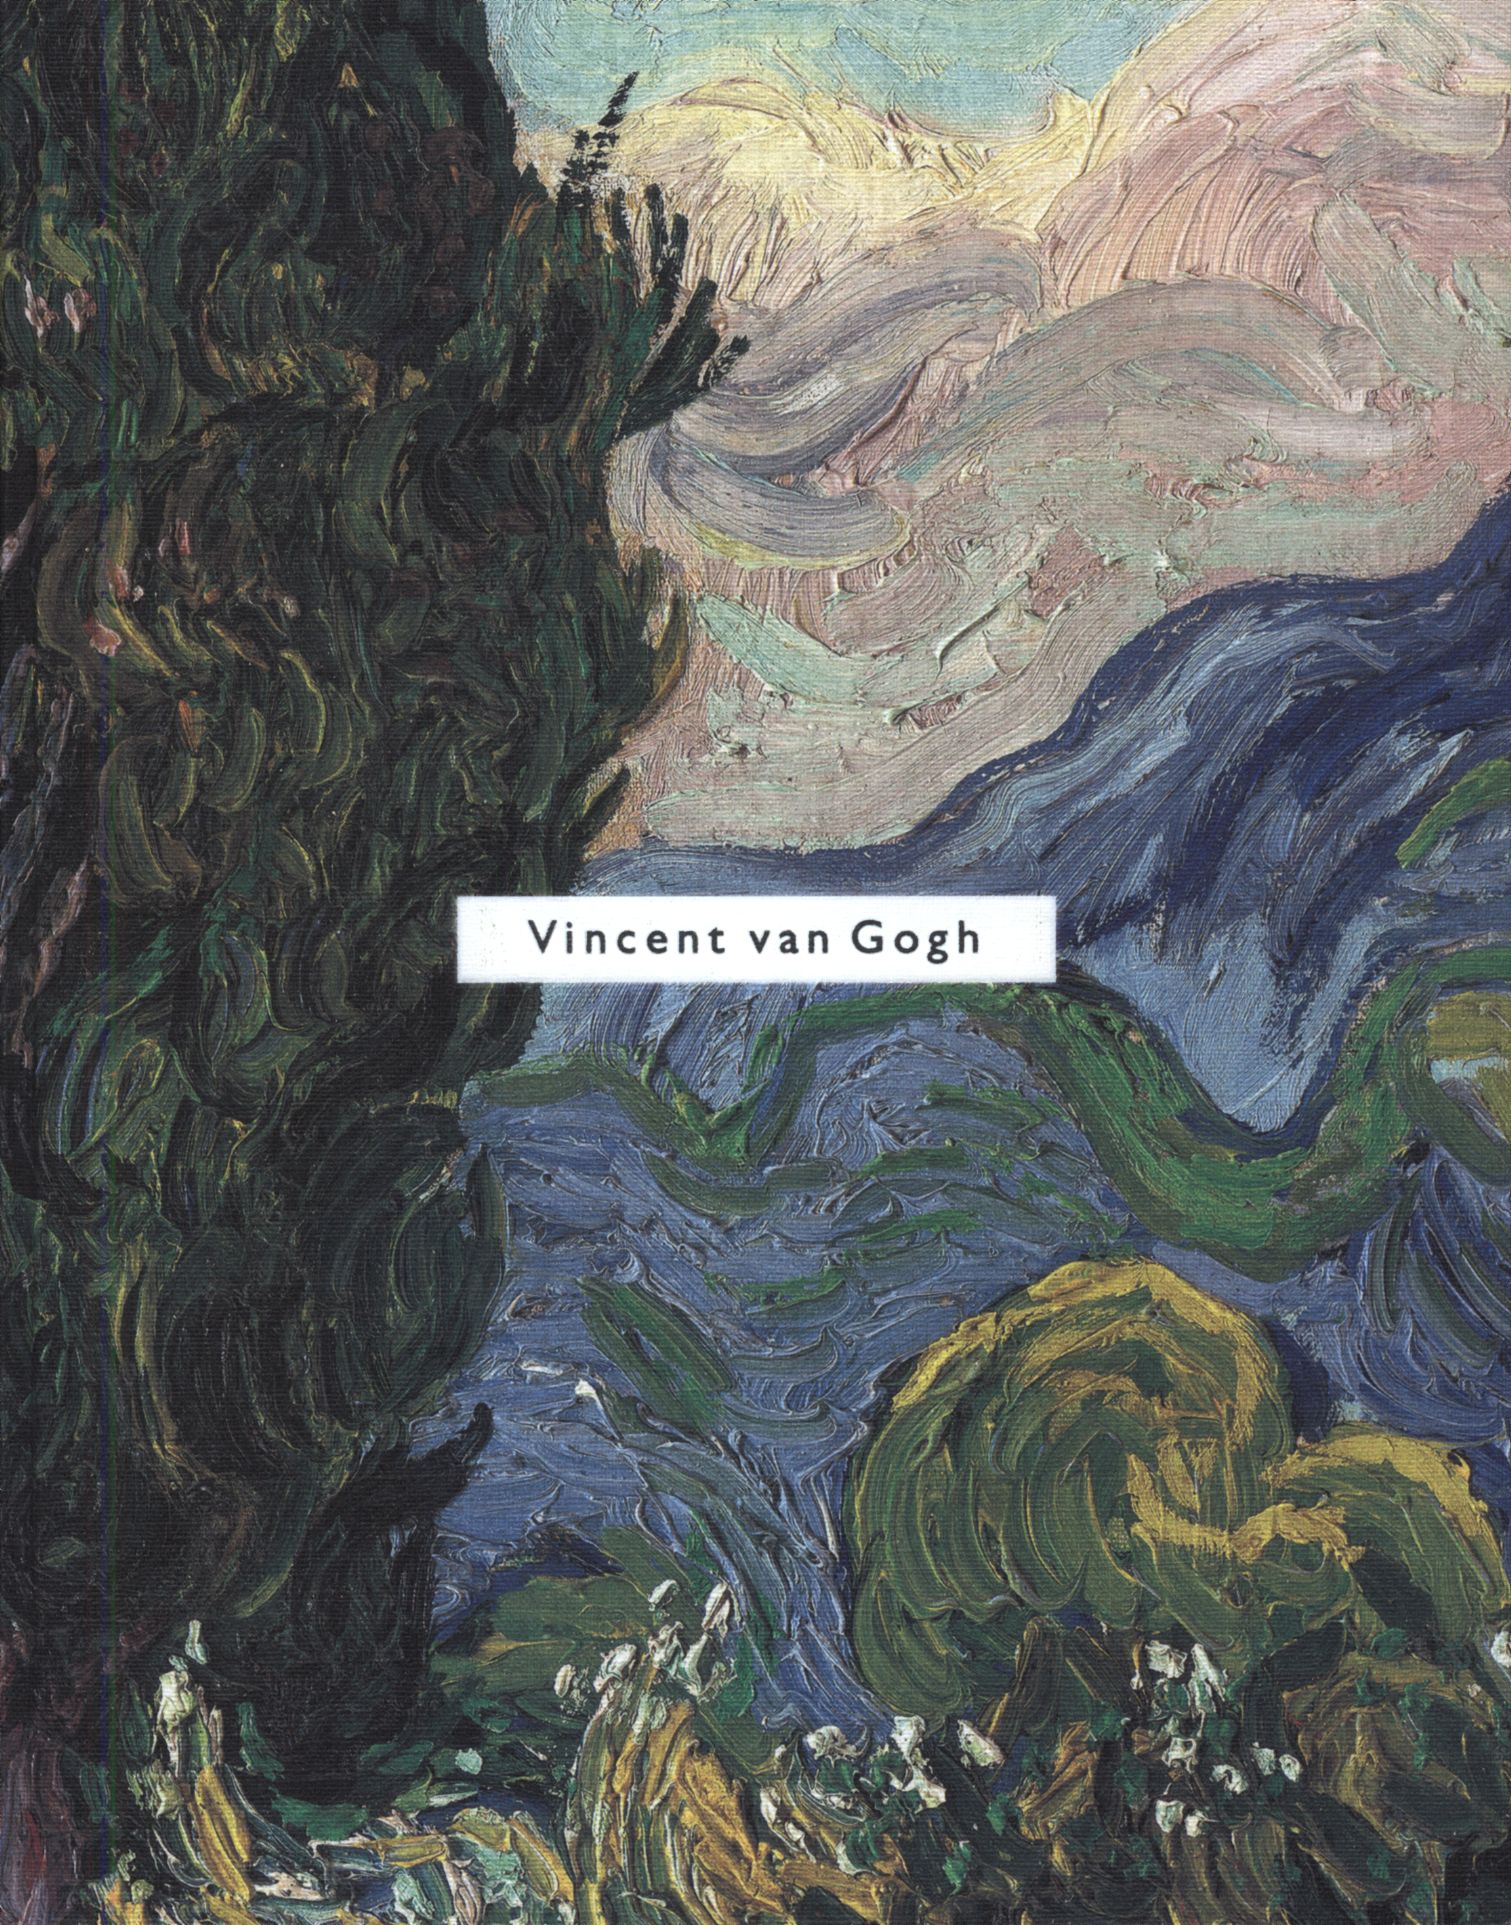 Vincent Van Gogh ゴッホ展 2019-2020 糸杉 まんだらけ Mandarake